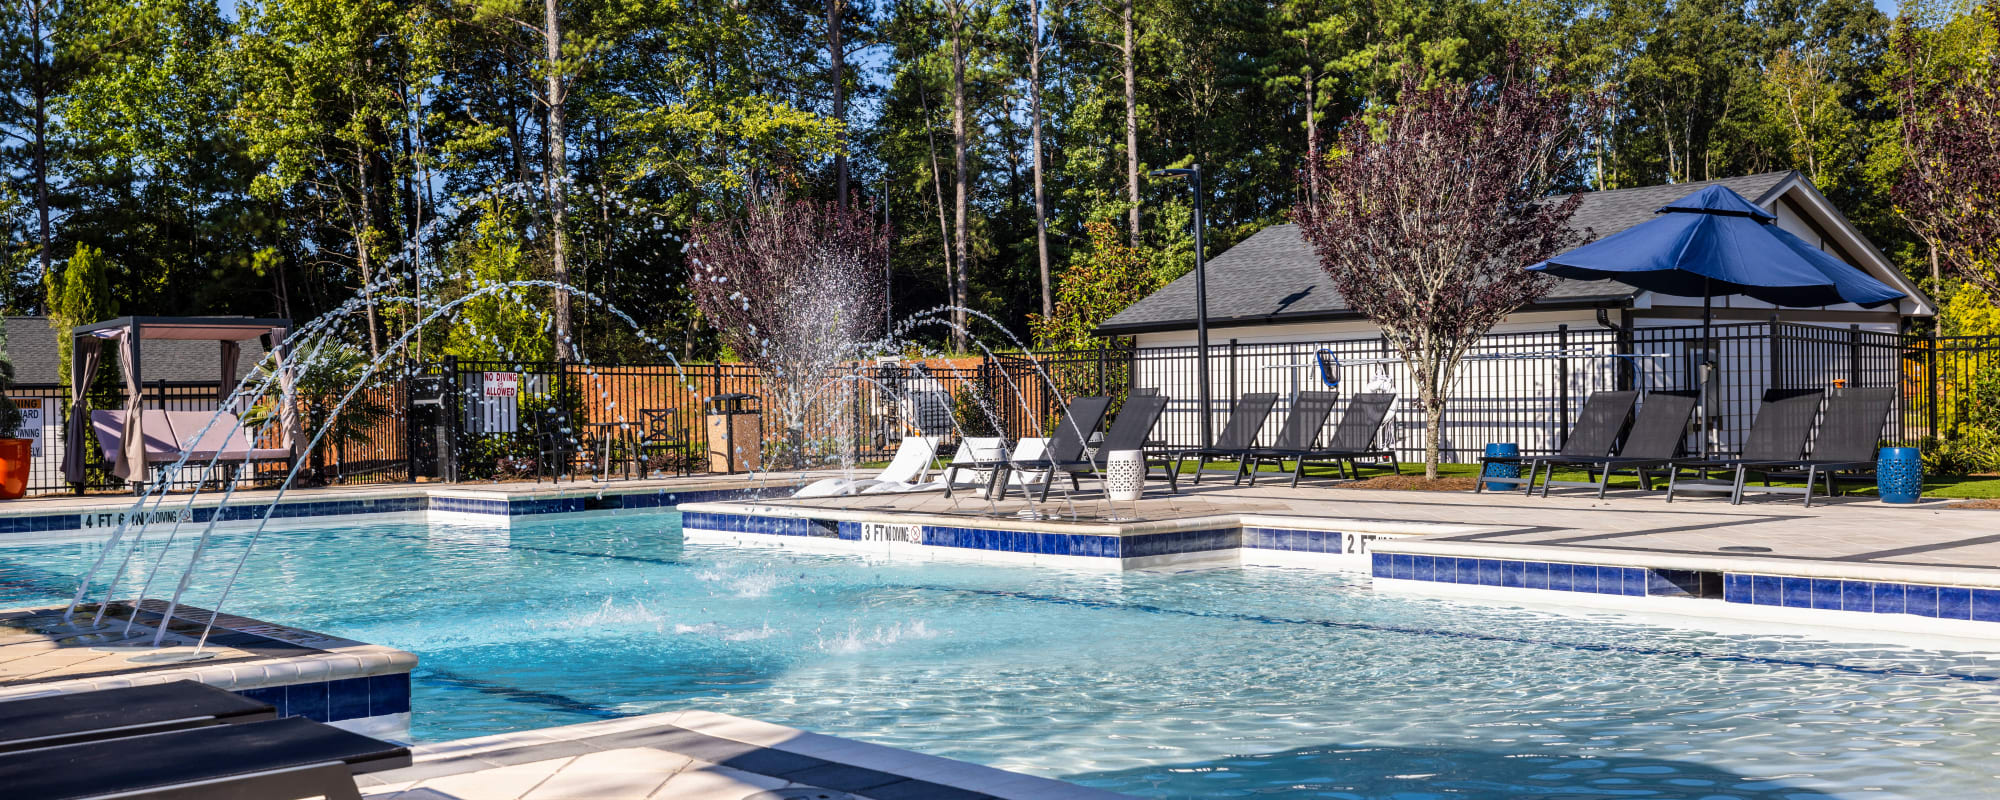 Luxurious swimming pool and outdoor lounge seating at Novo Stockbridge in Stockbridge, Georgia